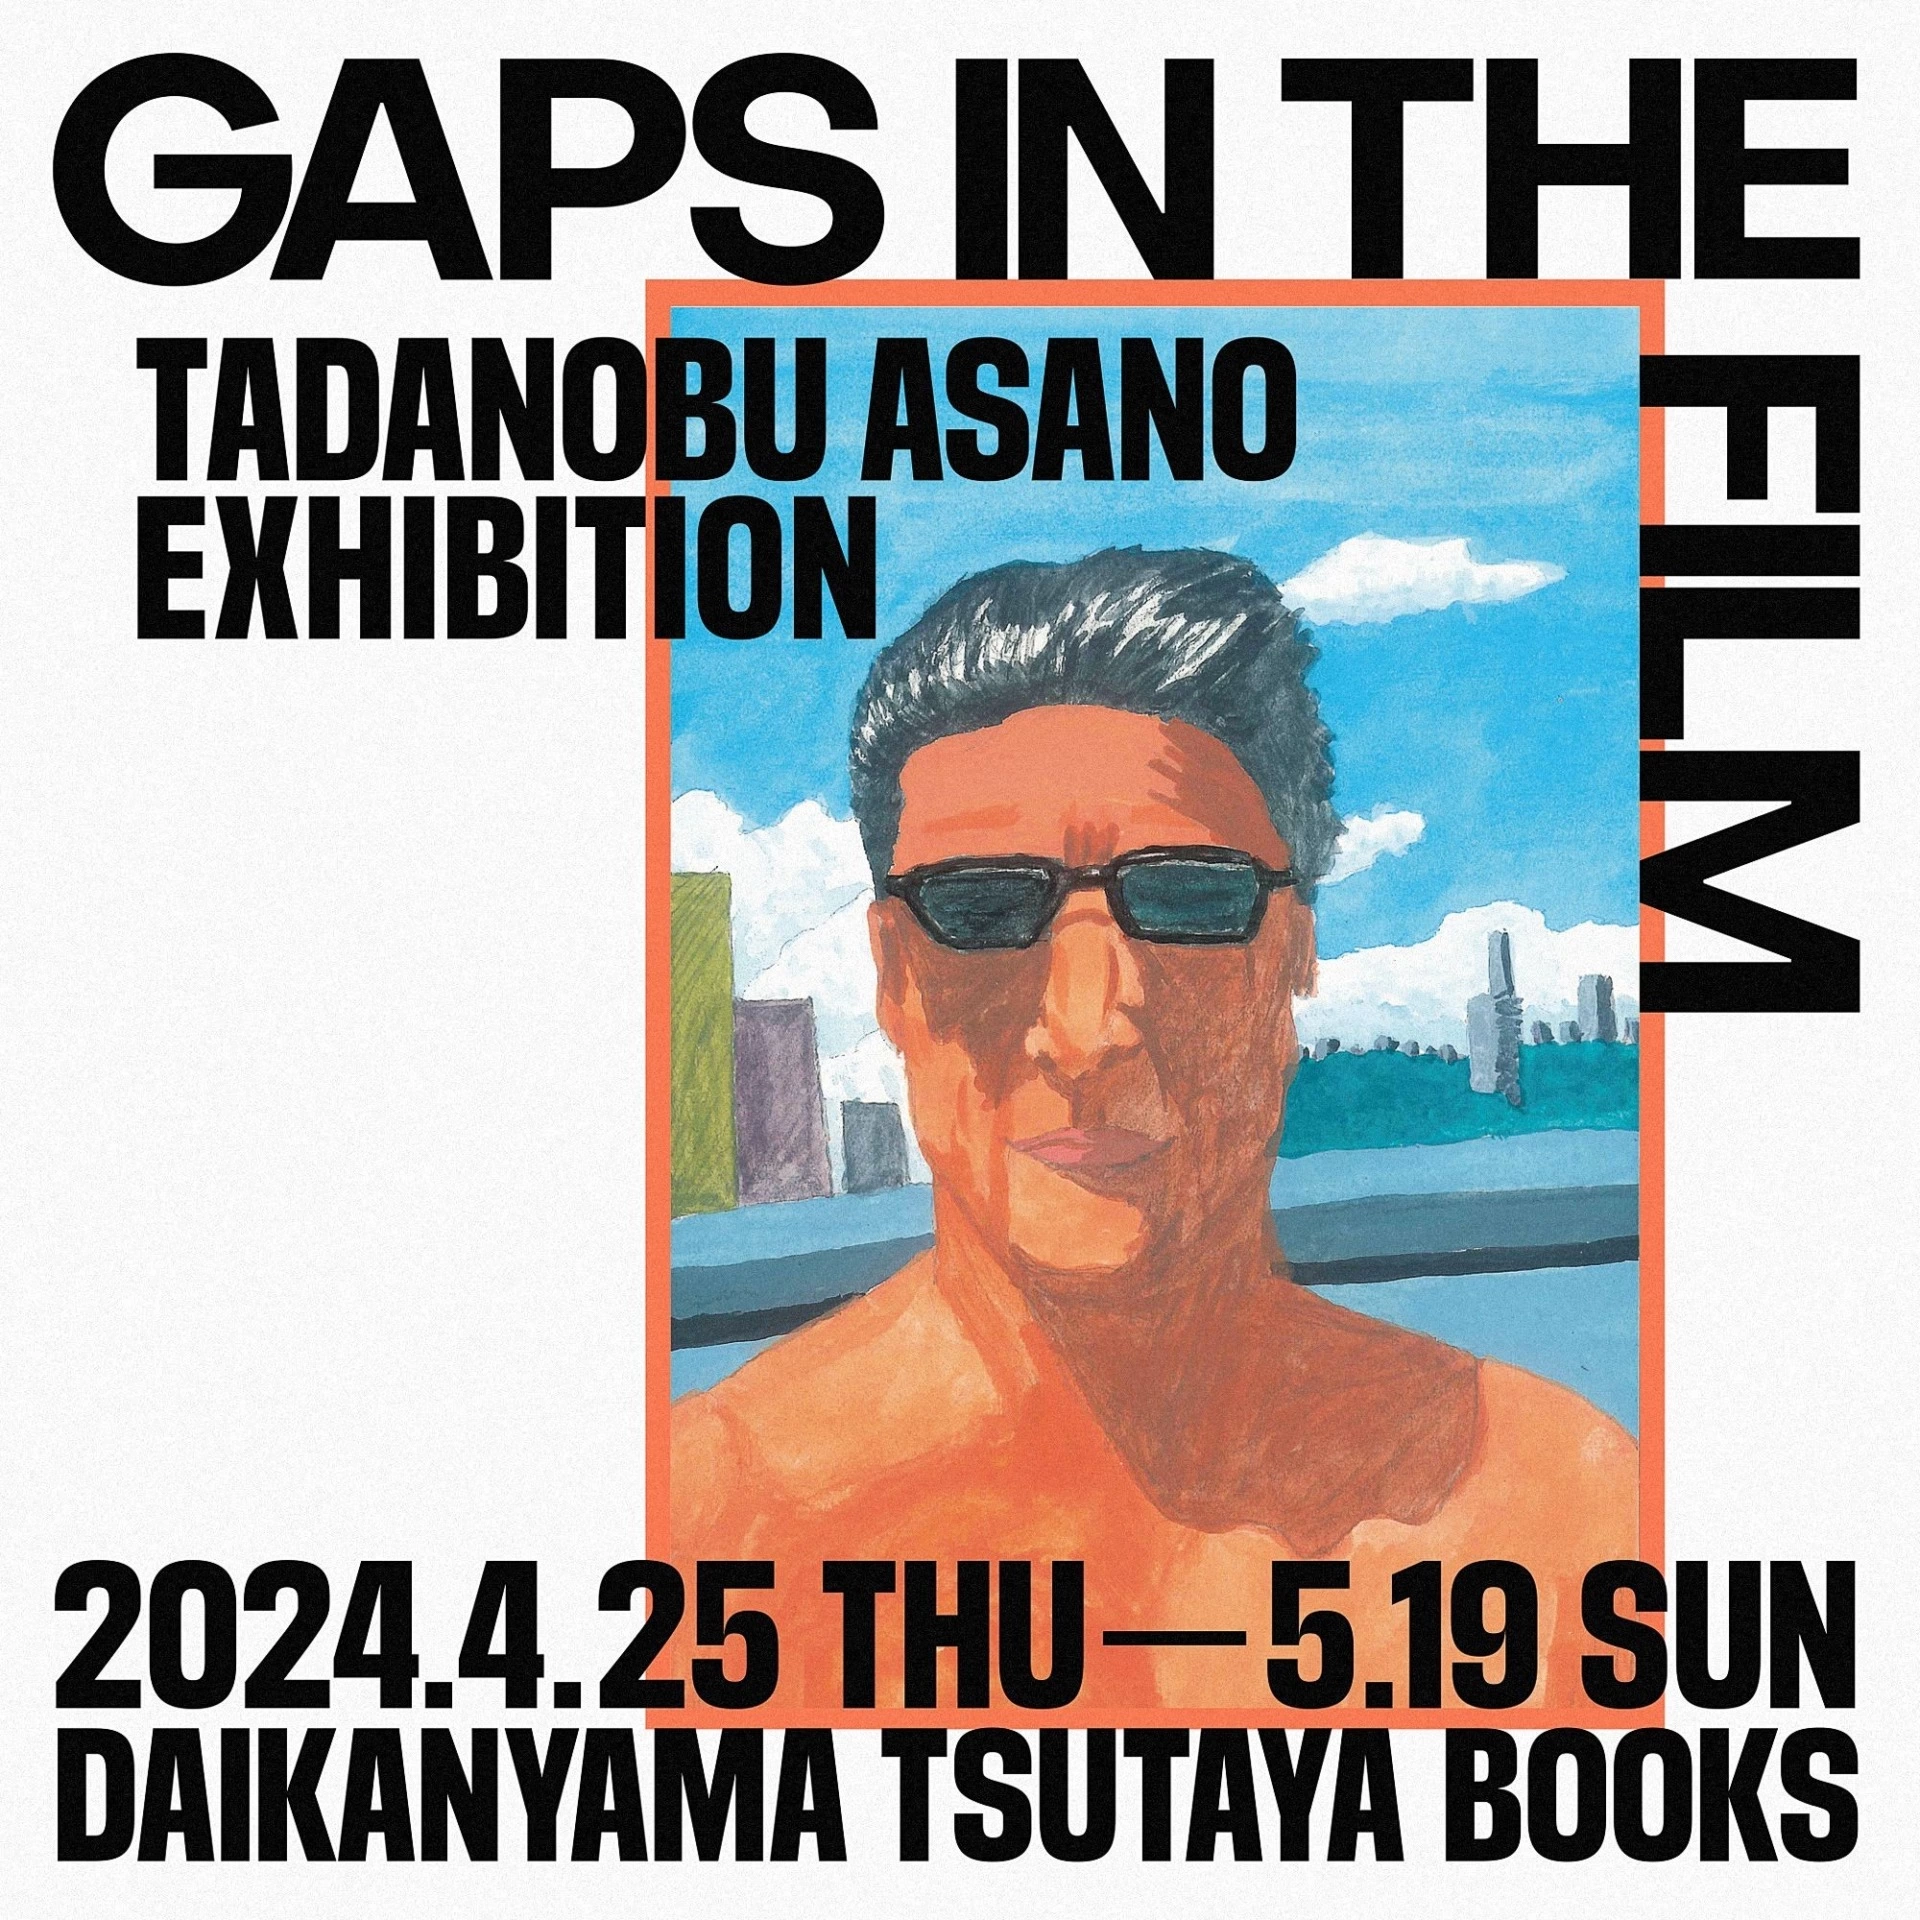 TADANOBU ASANO EXHIBITION "GAPS IN THE FILM"